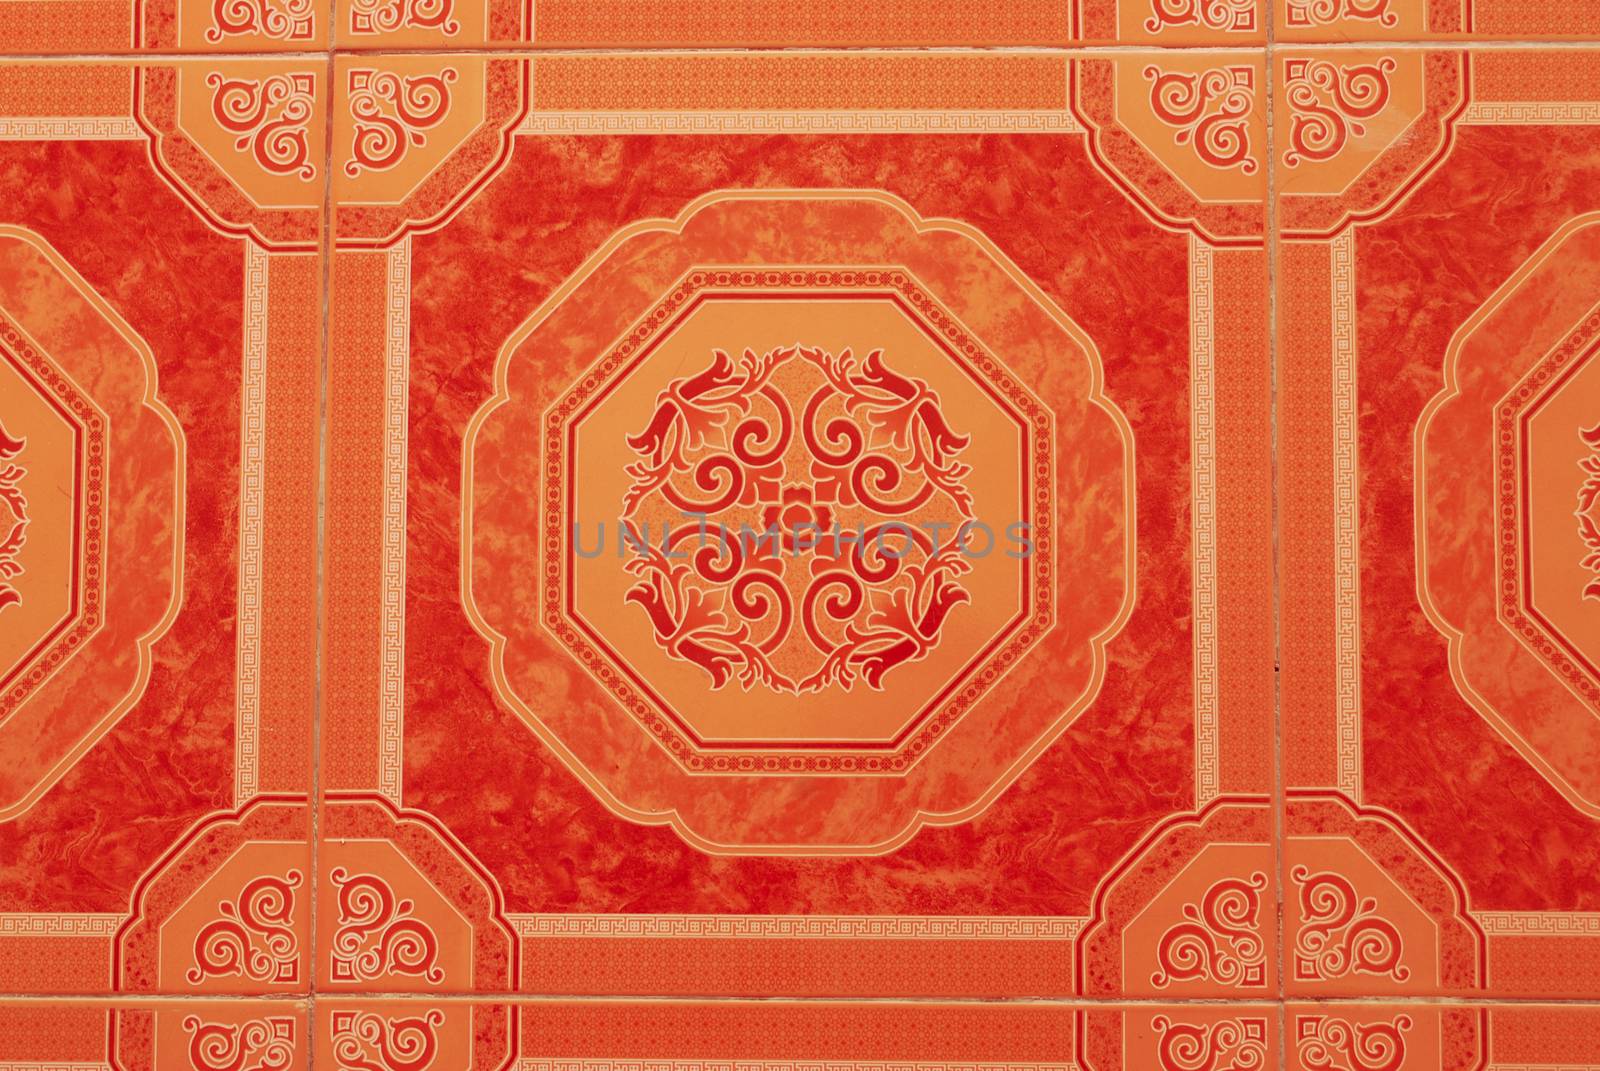 Tile pattern background.